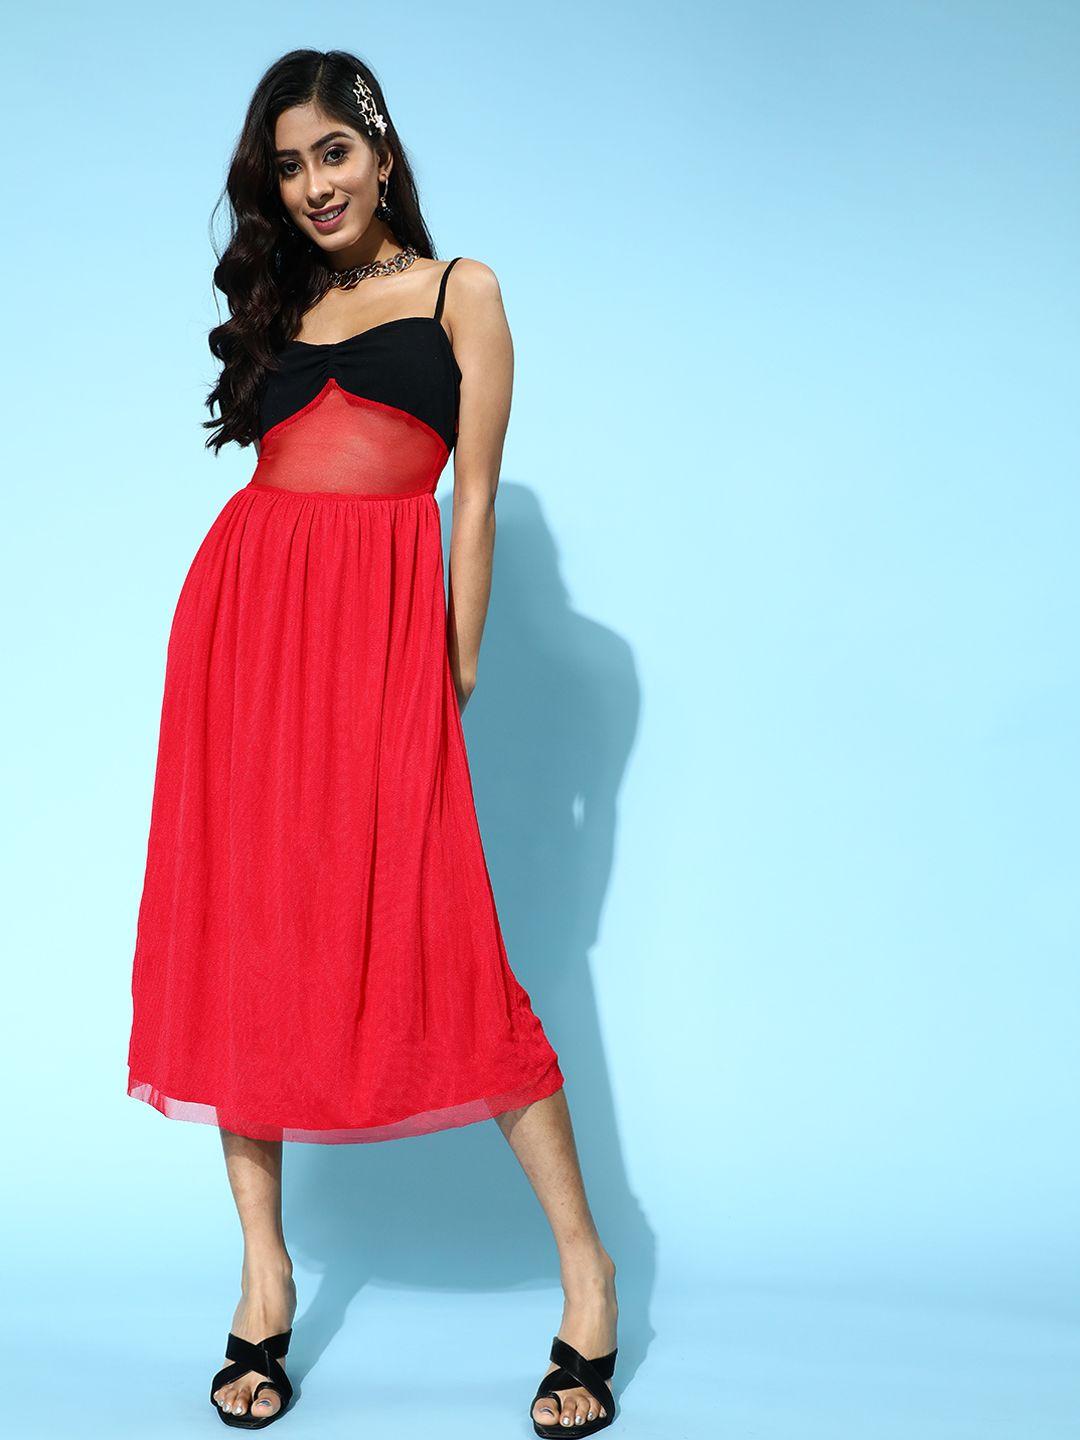 sassafras gorgeous red solid sheer dress